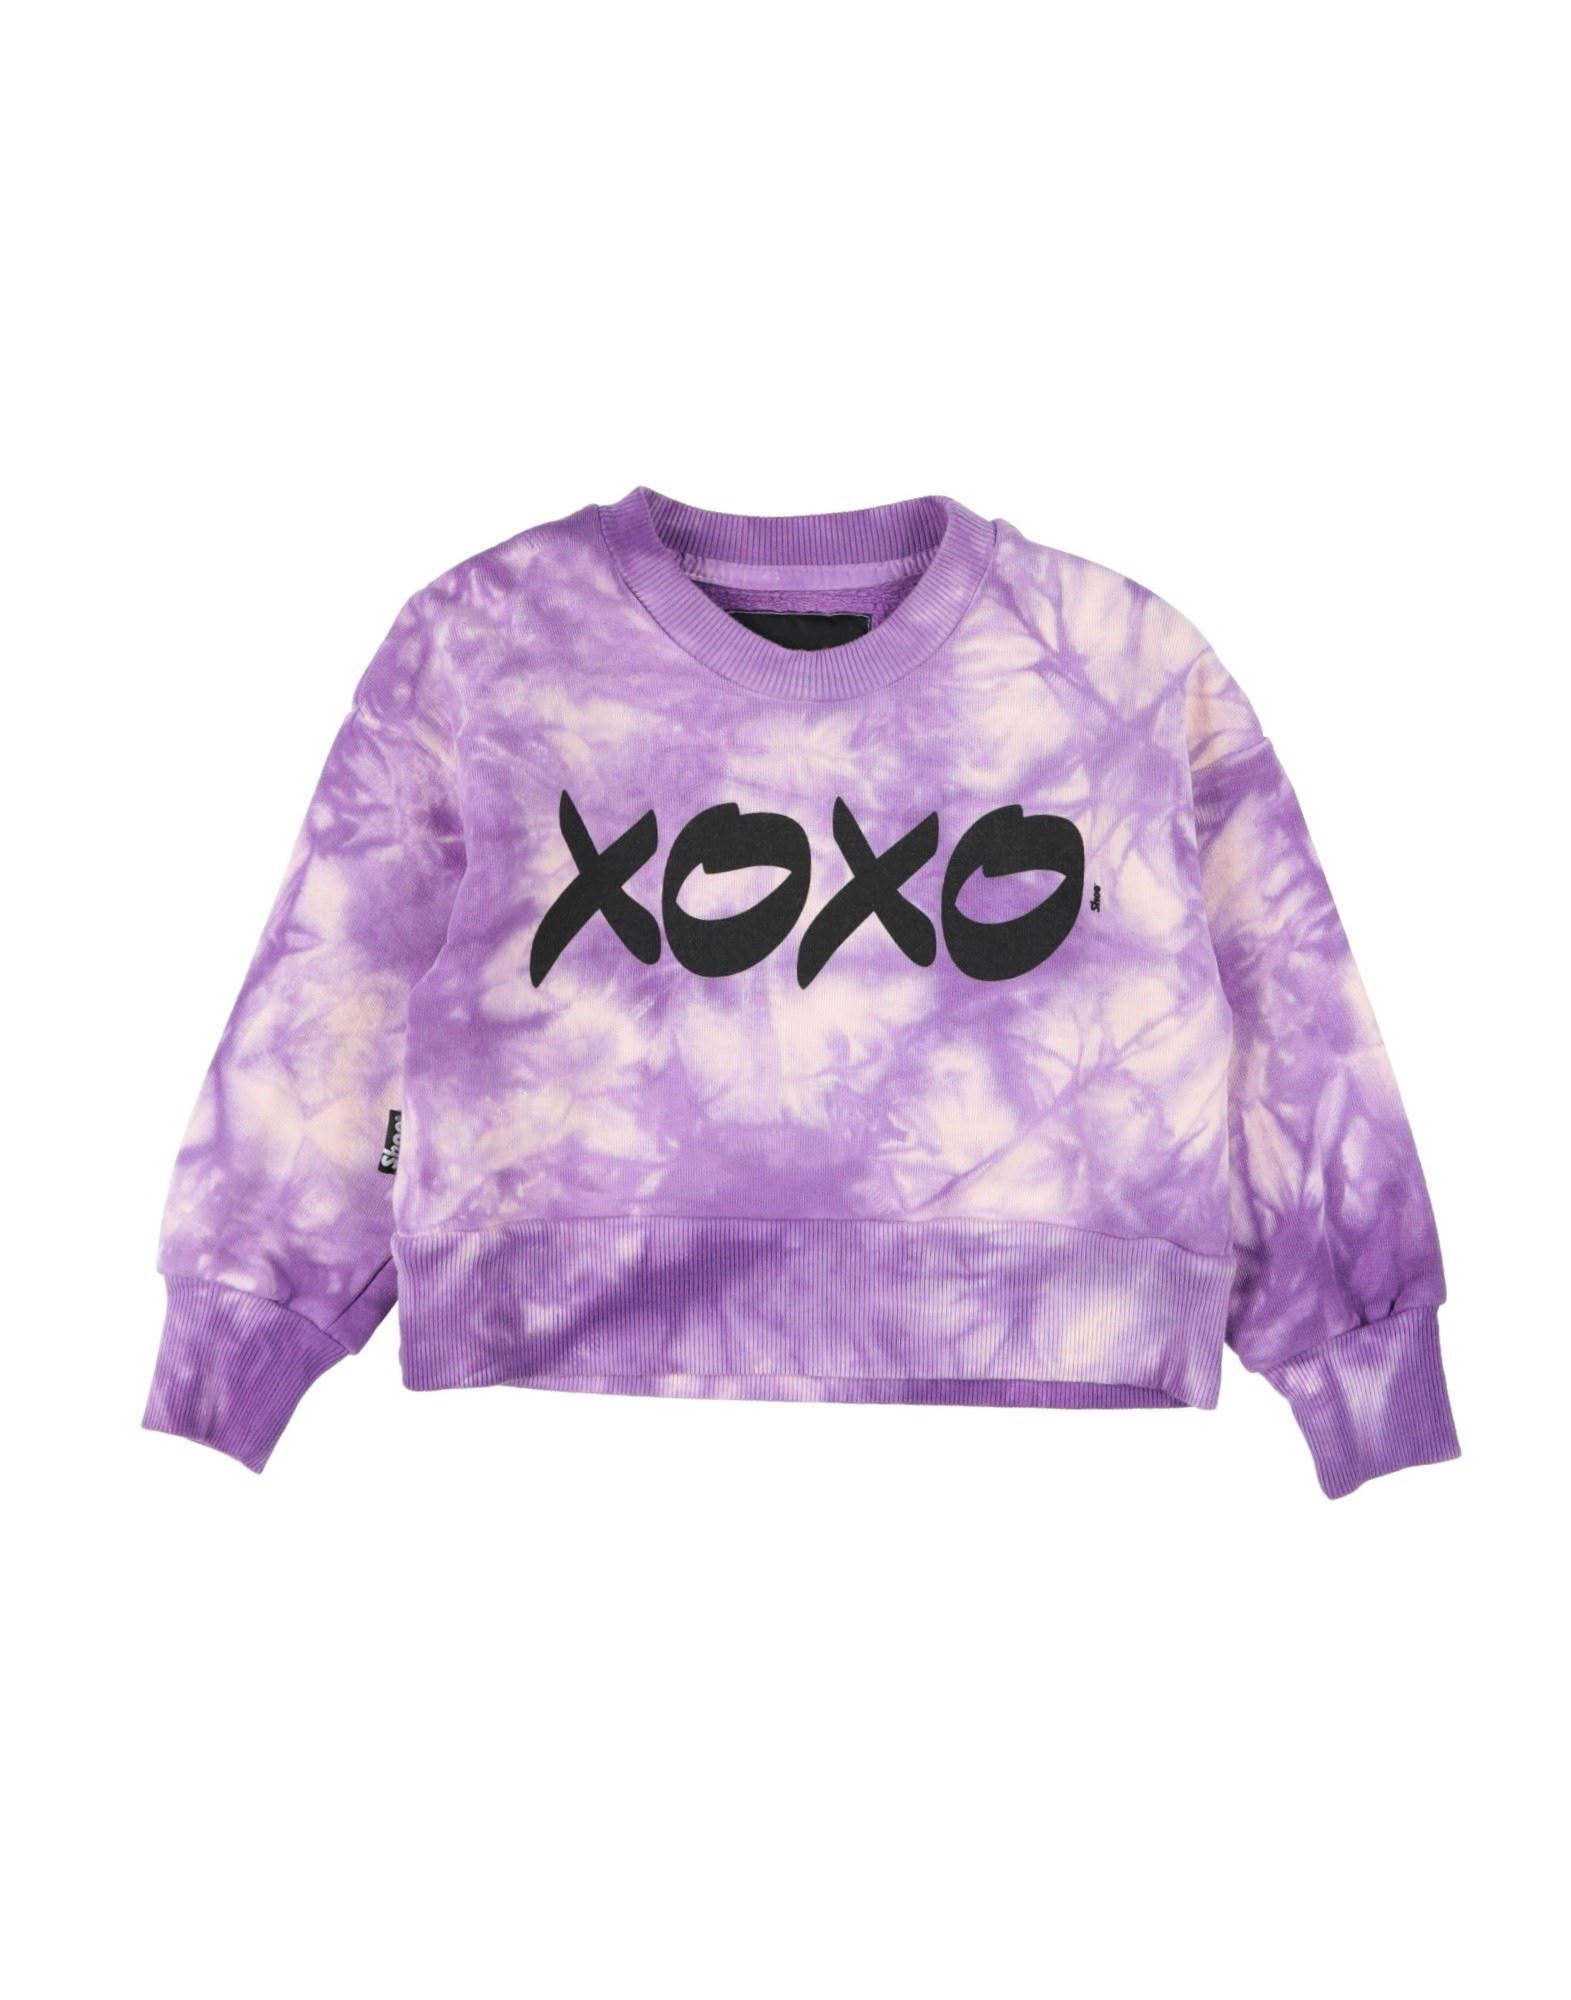 Shoe® Kids' Shoe Toddler Girl Sweatshirt Purple Size 3 Cotton